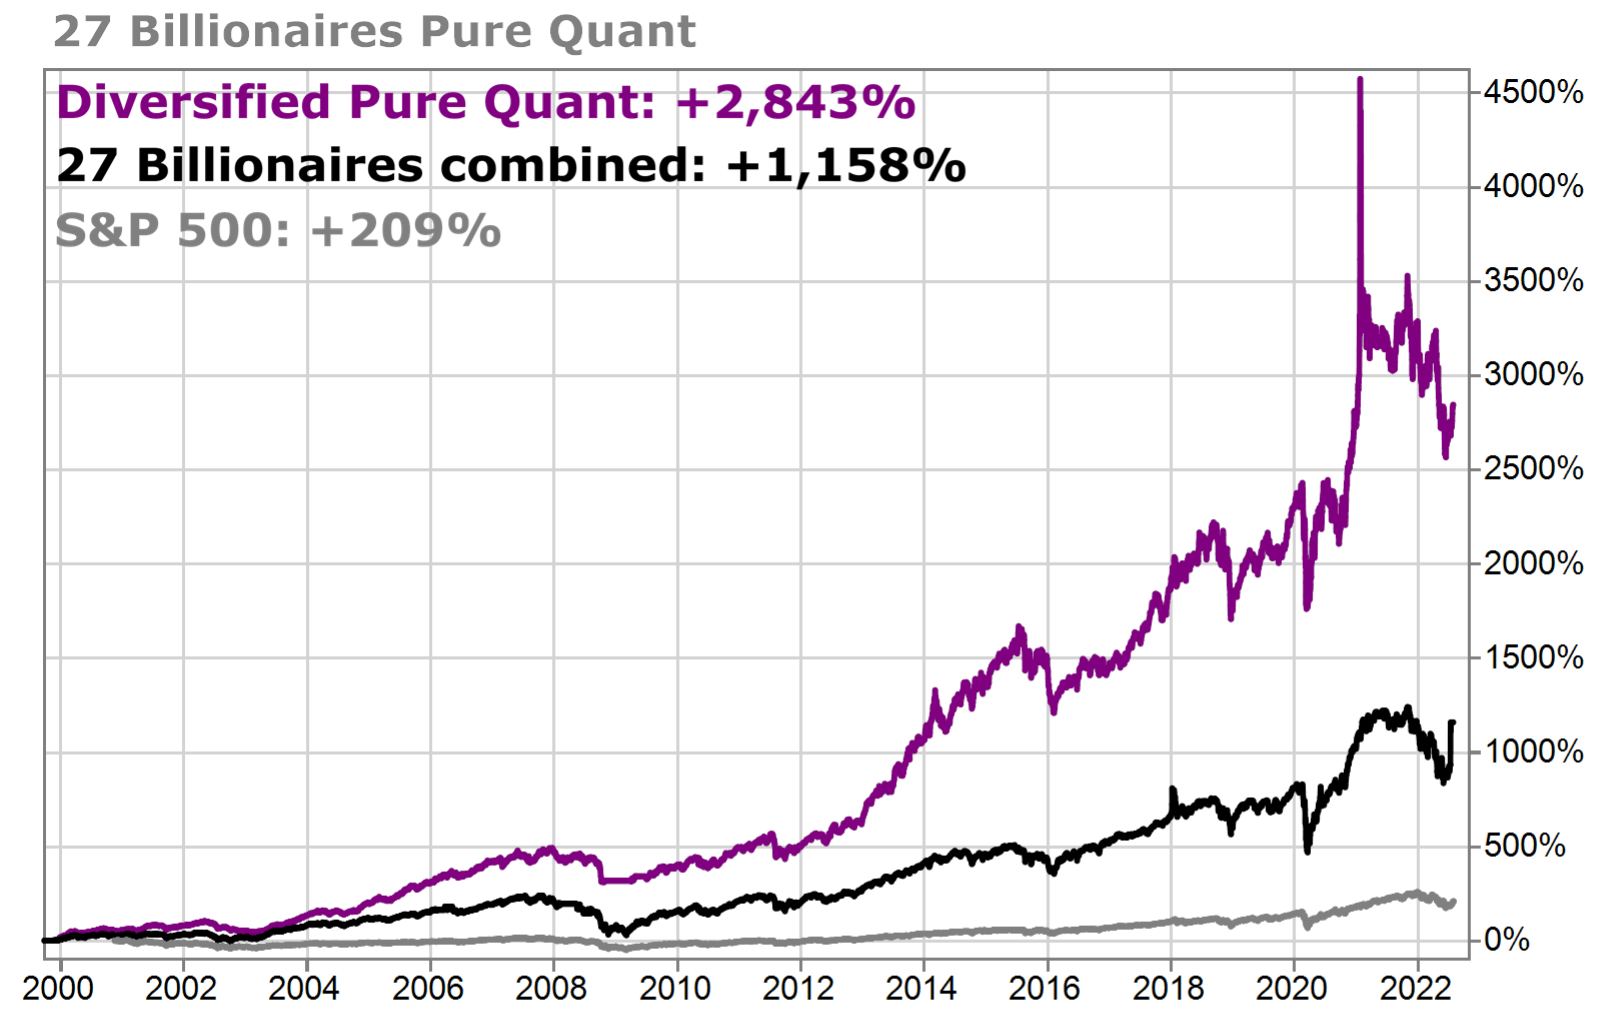 TradeSmith's Pure Quant Portfolio investors vs. billionaires and S&P 500.